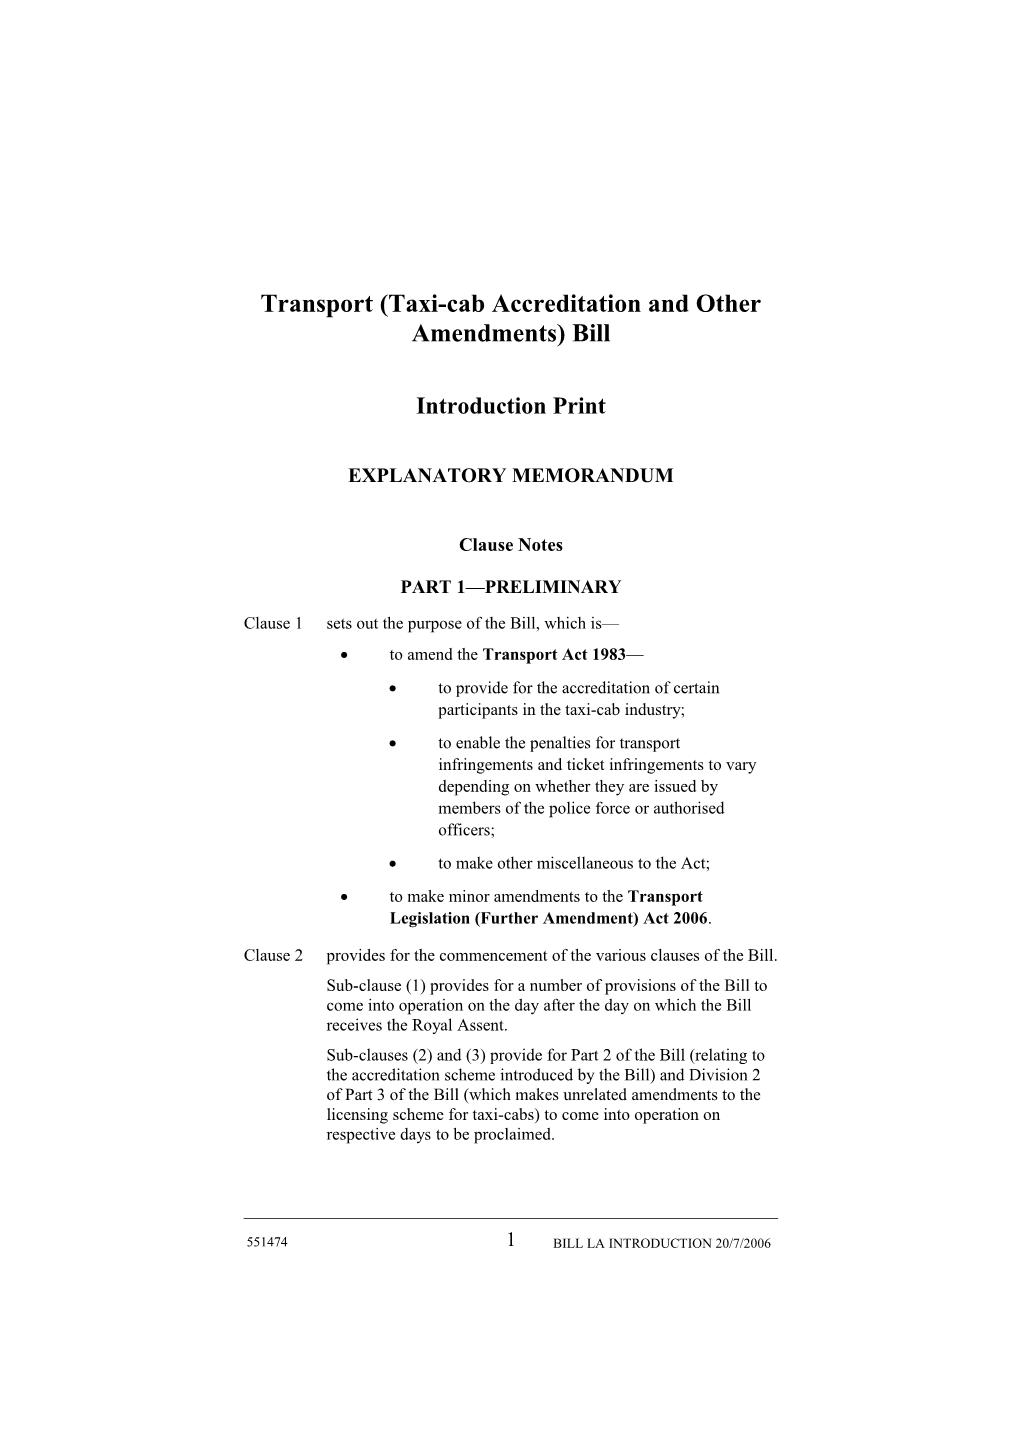 Transport (Taxi-Cab Accreditation and Other Amendments) Bill